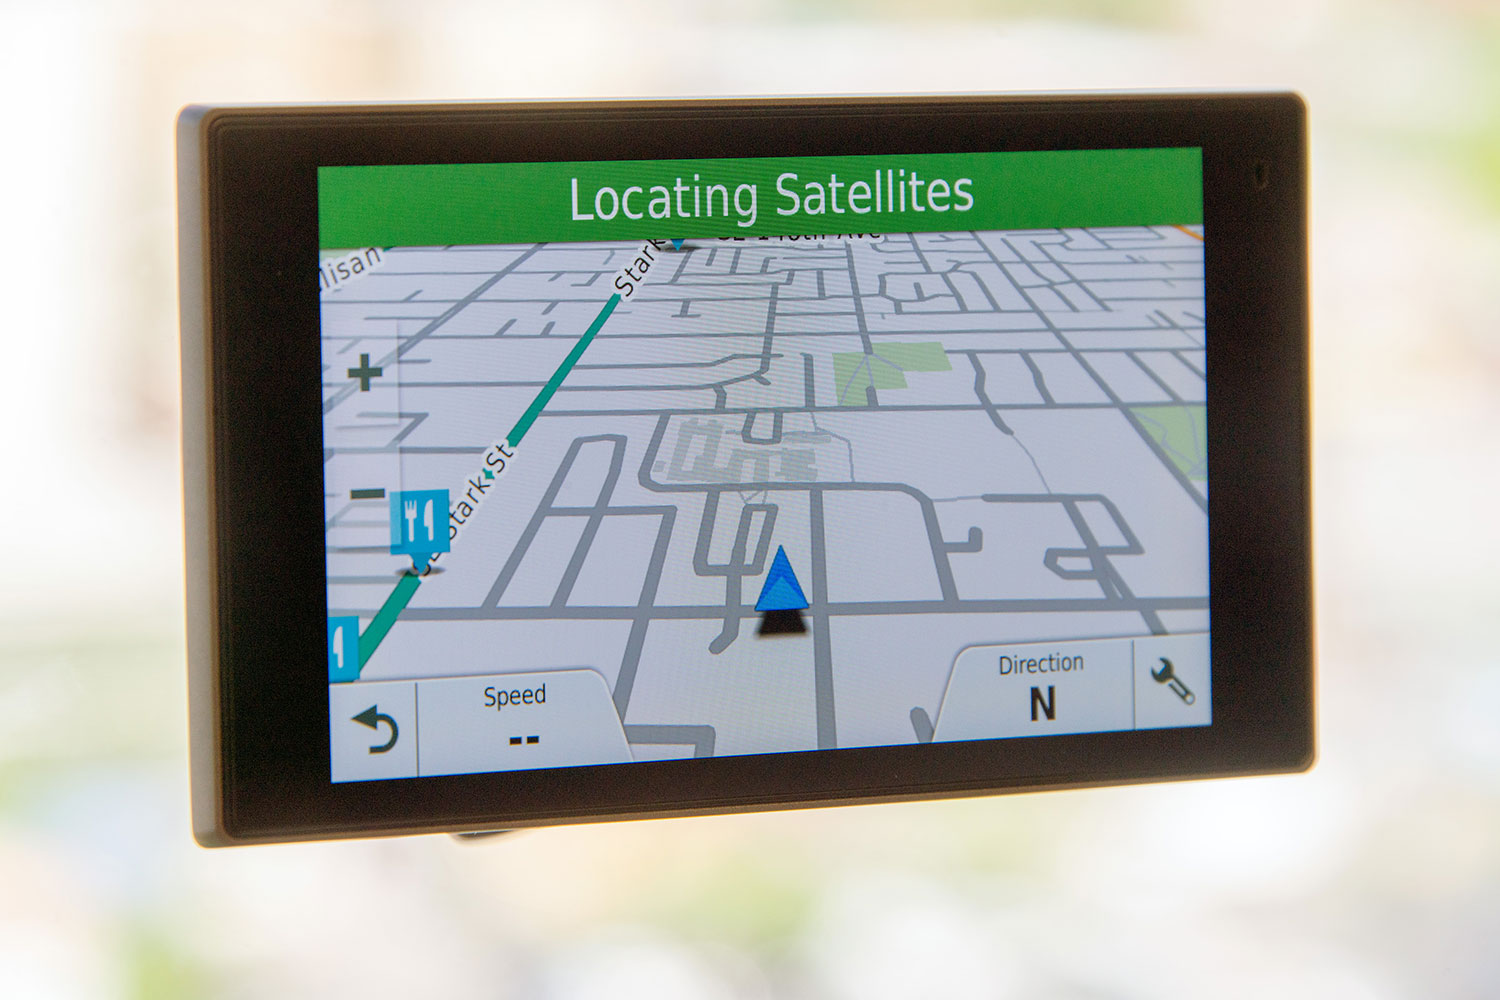 How to a Garmin GPS | Digital Trends